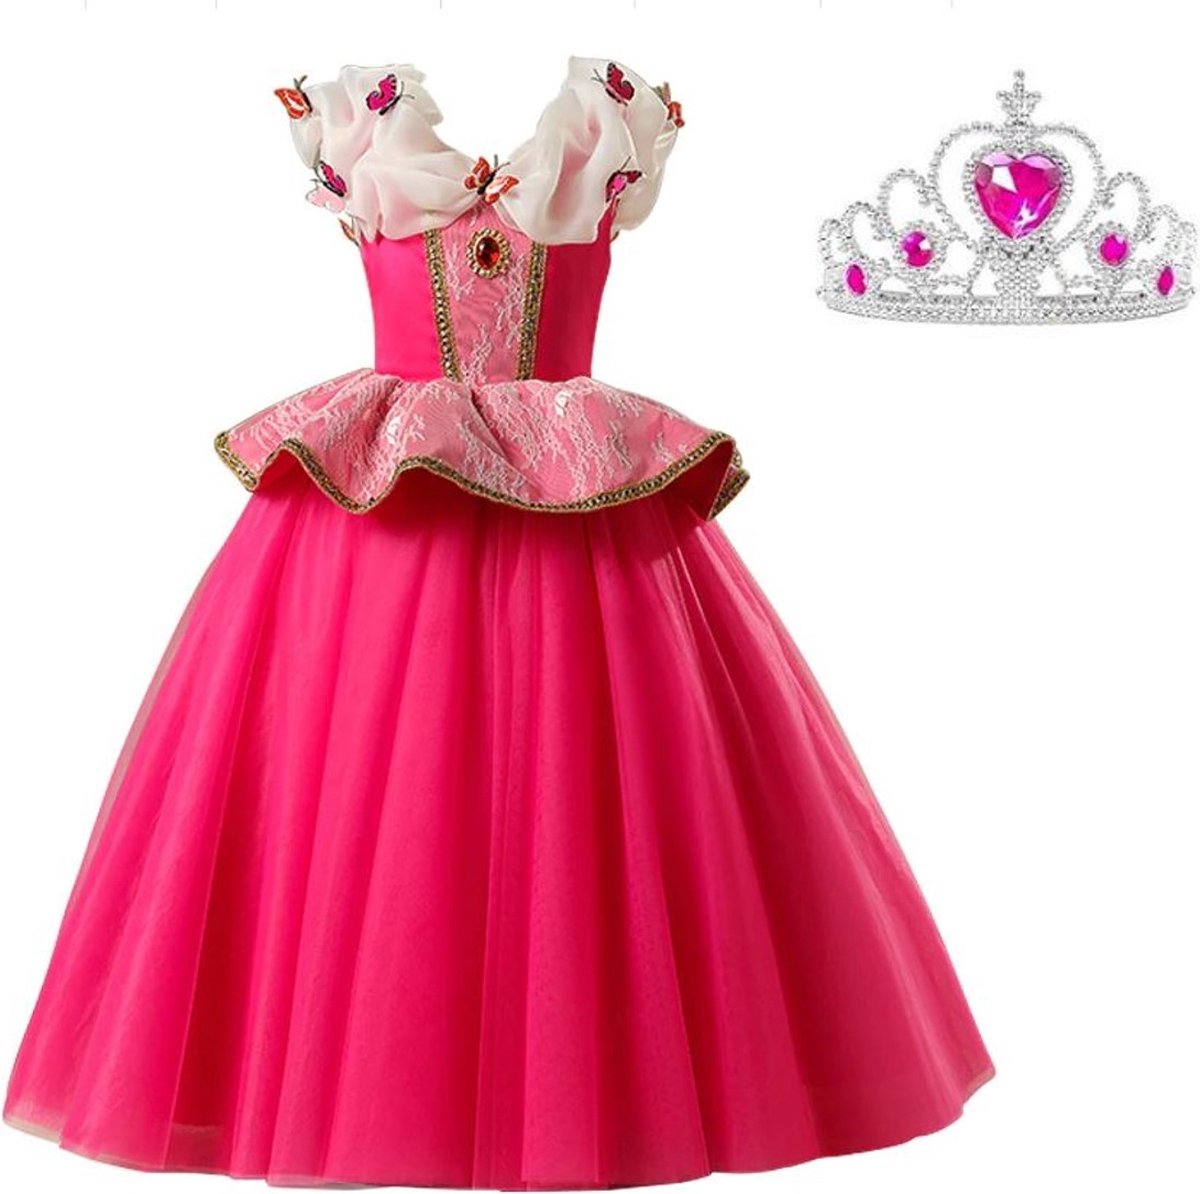 Doornroosje jurk Prinsessen jurk Deluxe verkleedjurk vlinders 140-146 (140) fel roze + kroon verkleedkleding